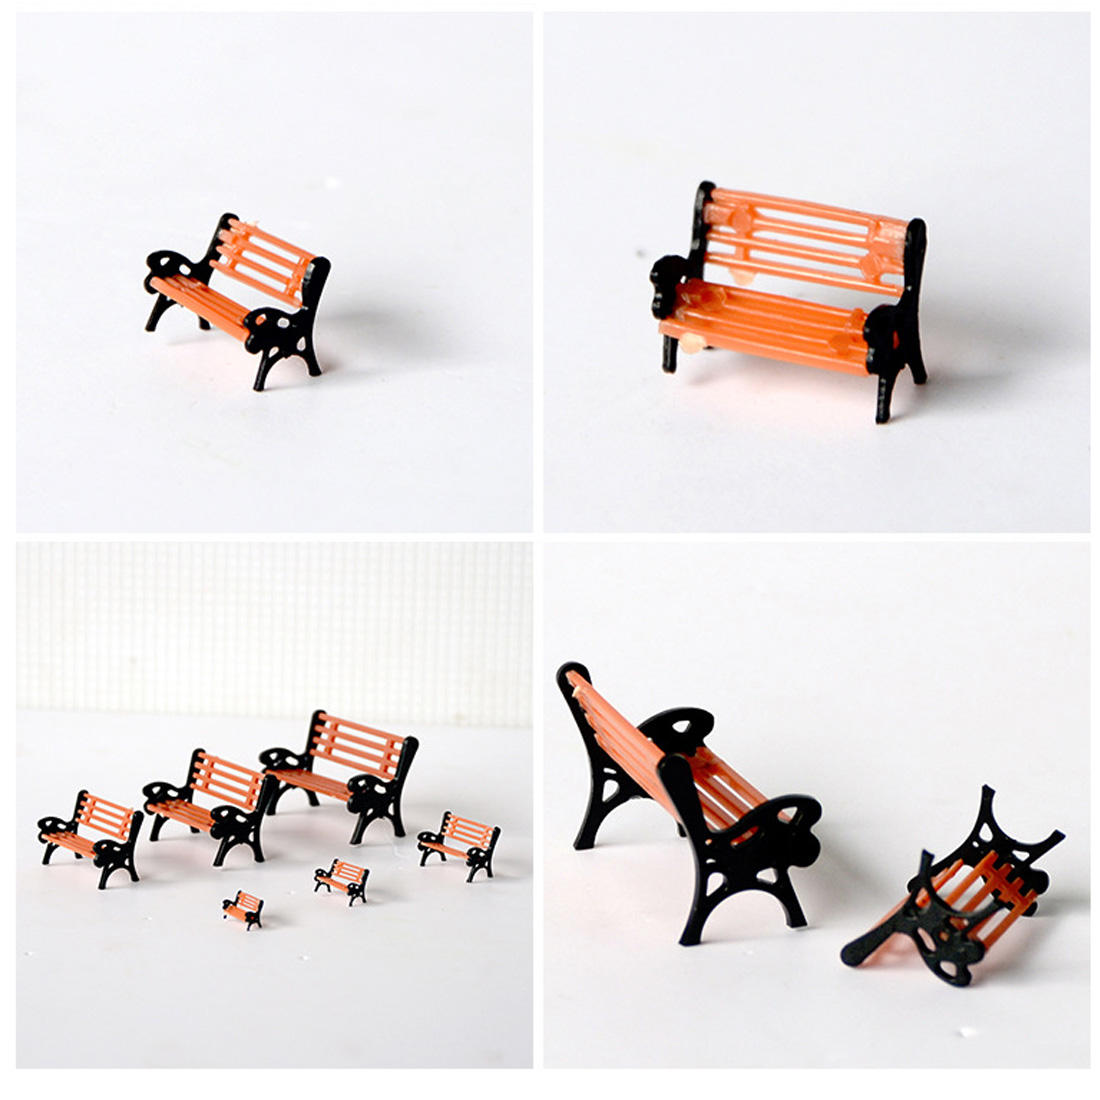 20pcs 1/75 Scale Park Benches Model DIY Sand Table Layout Architecture Model - Black + Orange